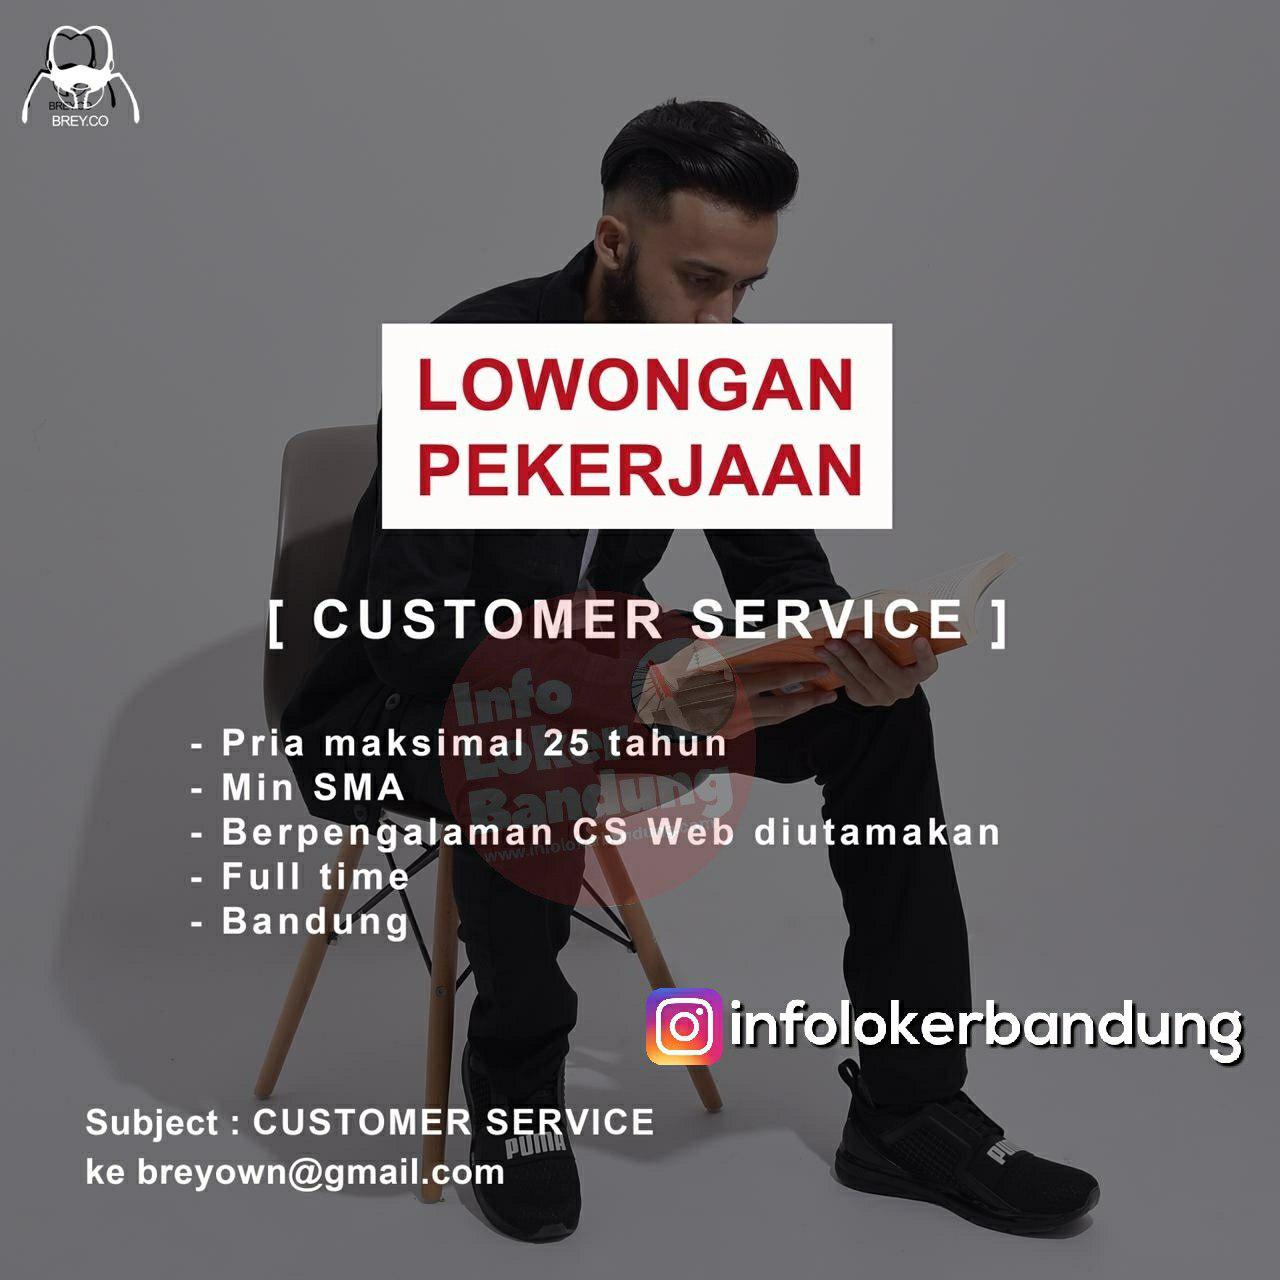 Lowongan Kerja Customer Service Brey.co Bandung Maret 2019